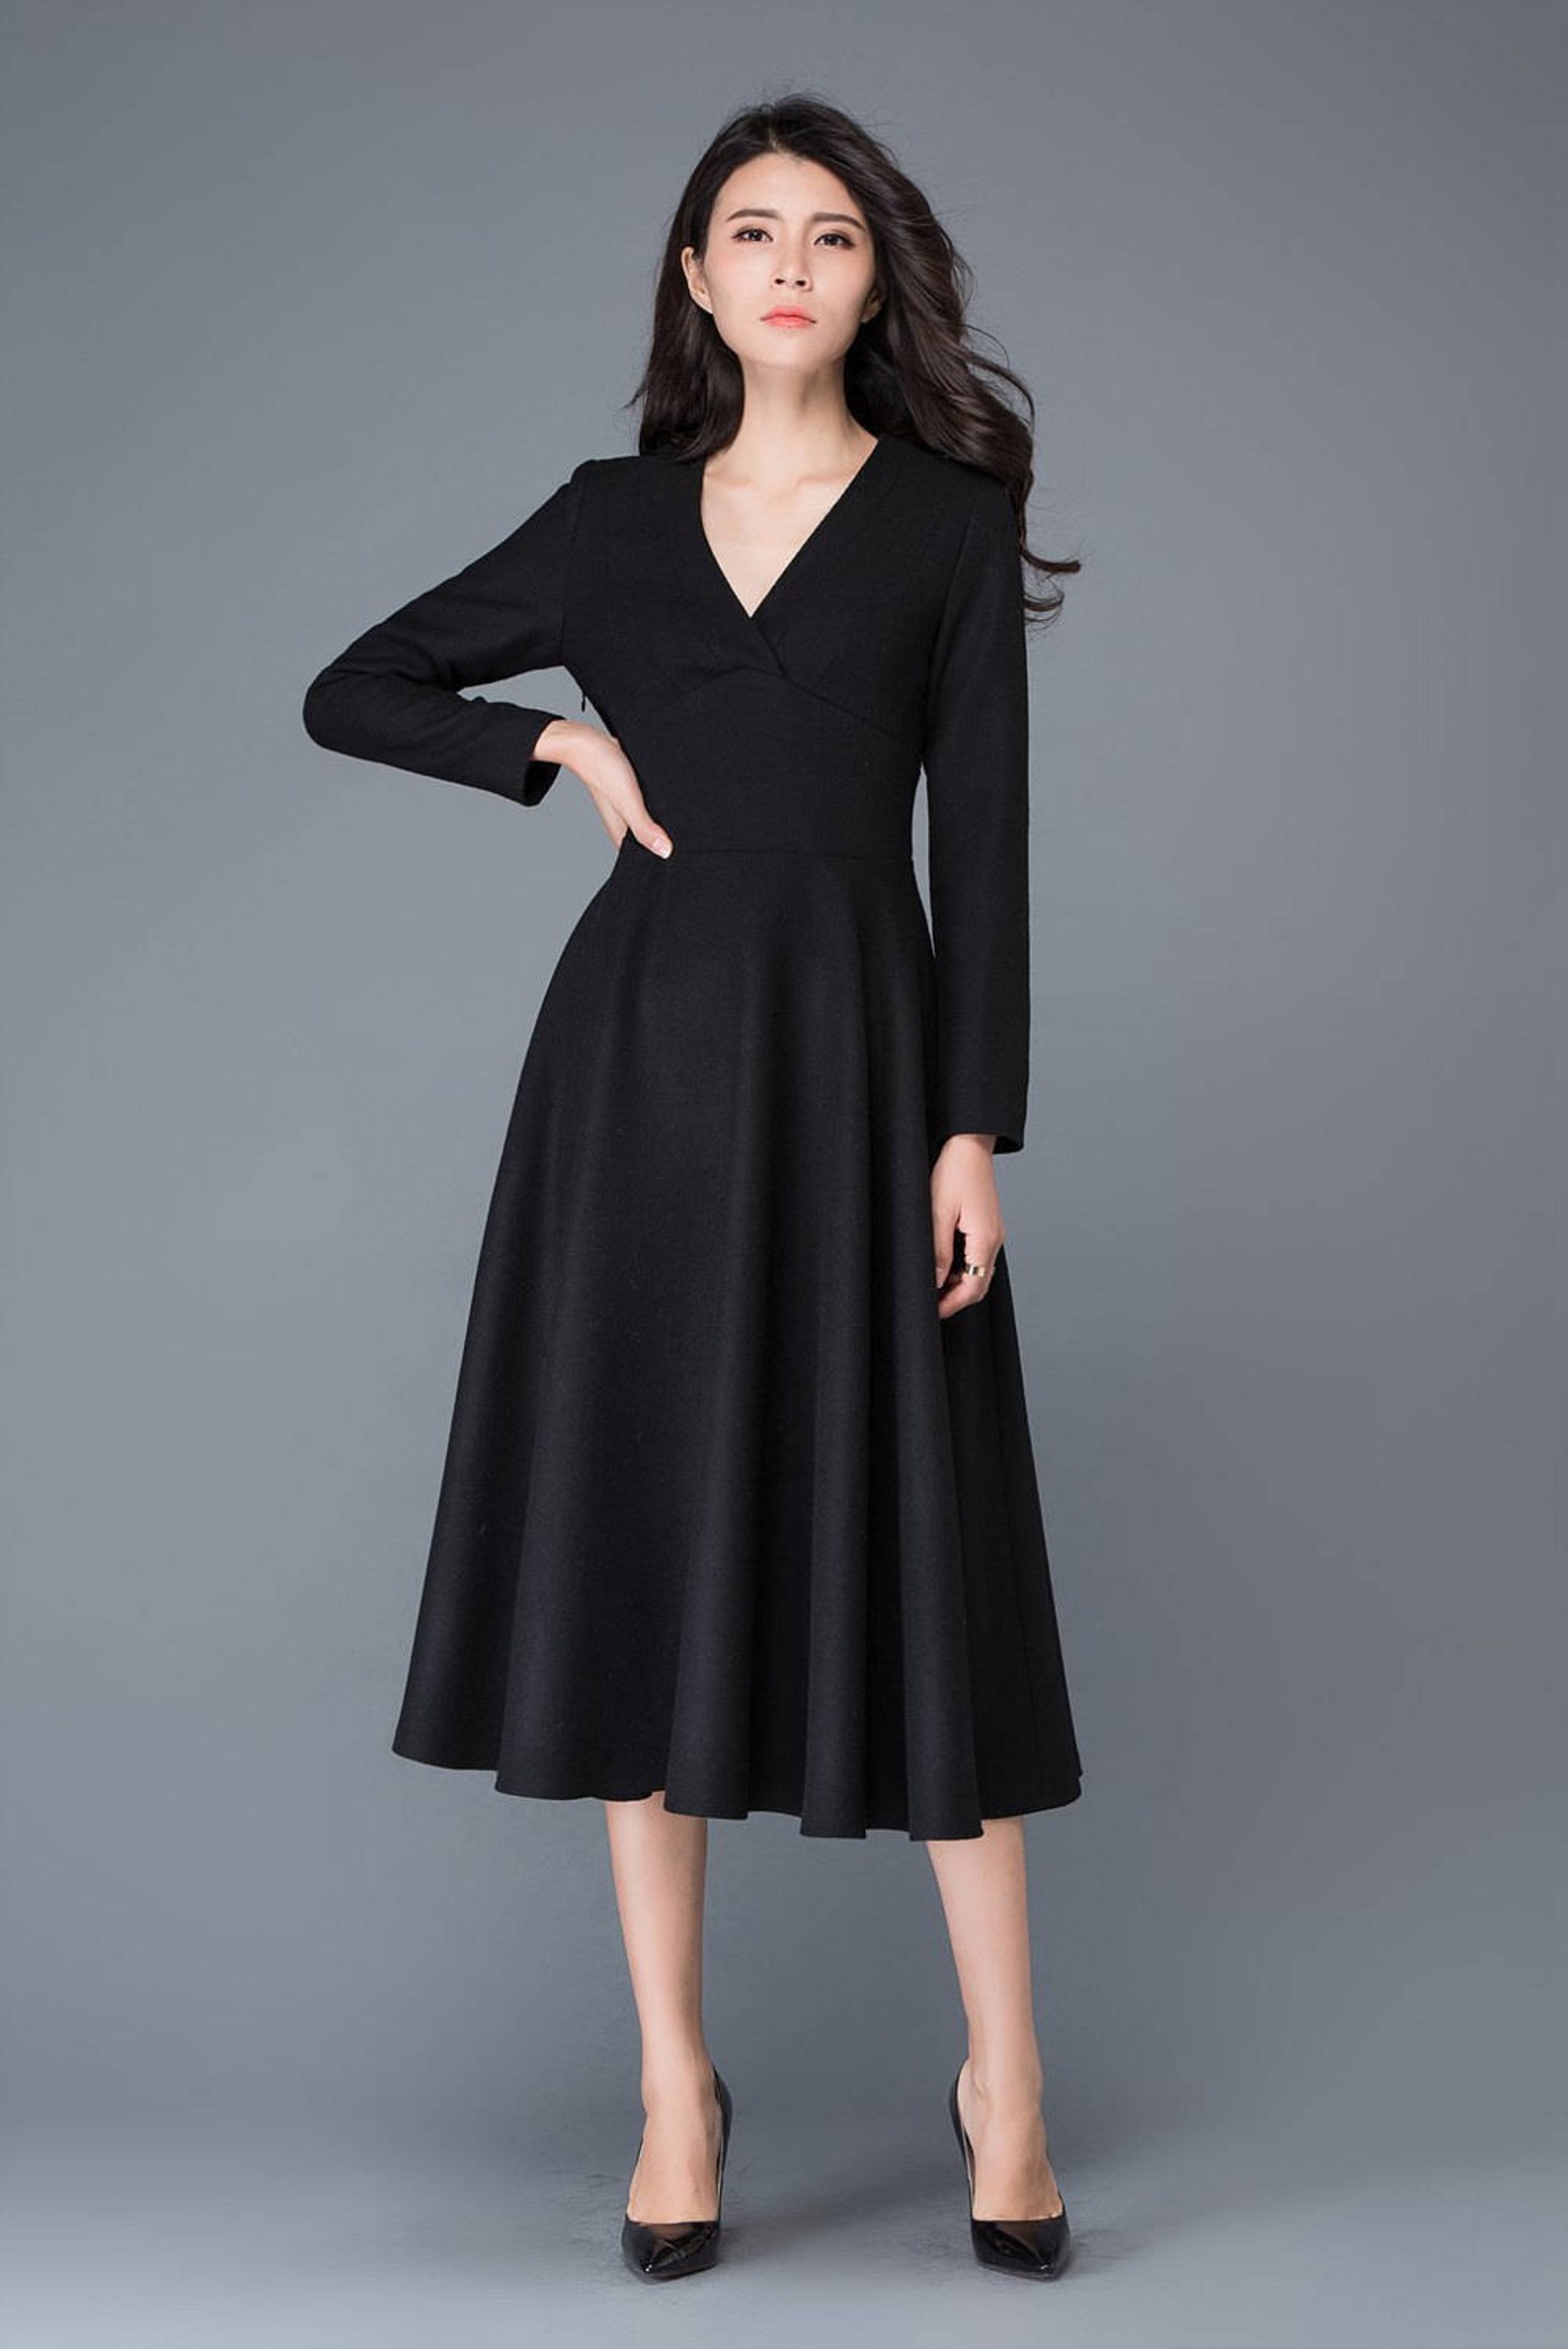 Wool Dress Woman Dress Winter Dress Vintage Dress Womens | Etsy